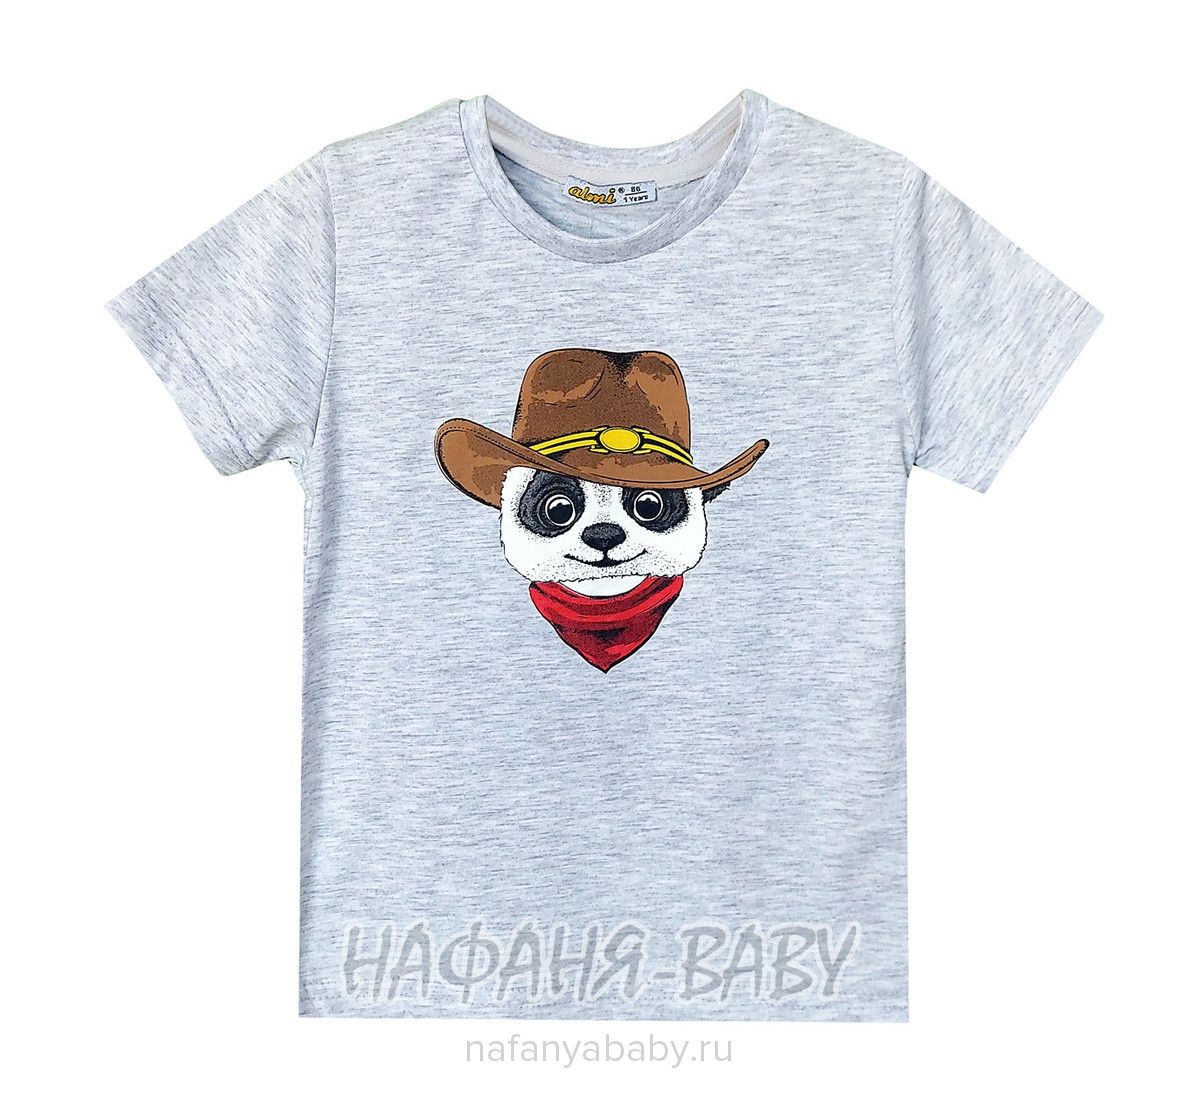 Детская футболка ALG арт: 122120, 1-4 года, цвет серый меланж, оптом Турция